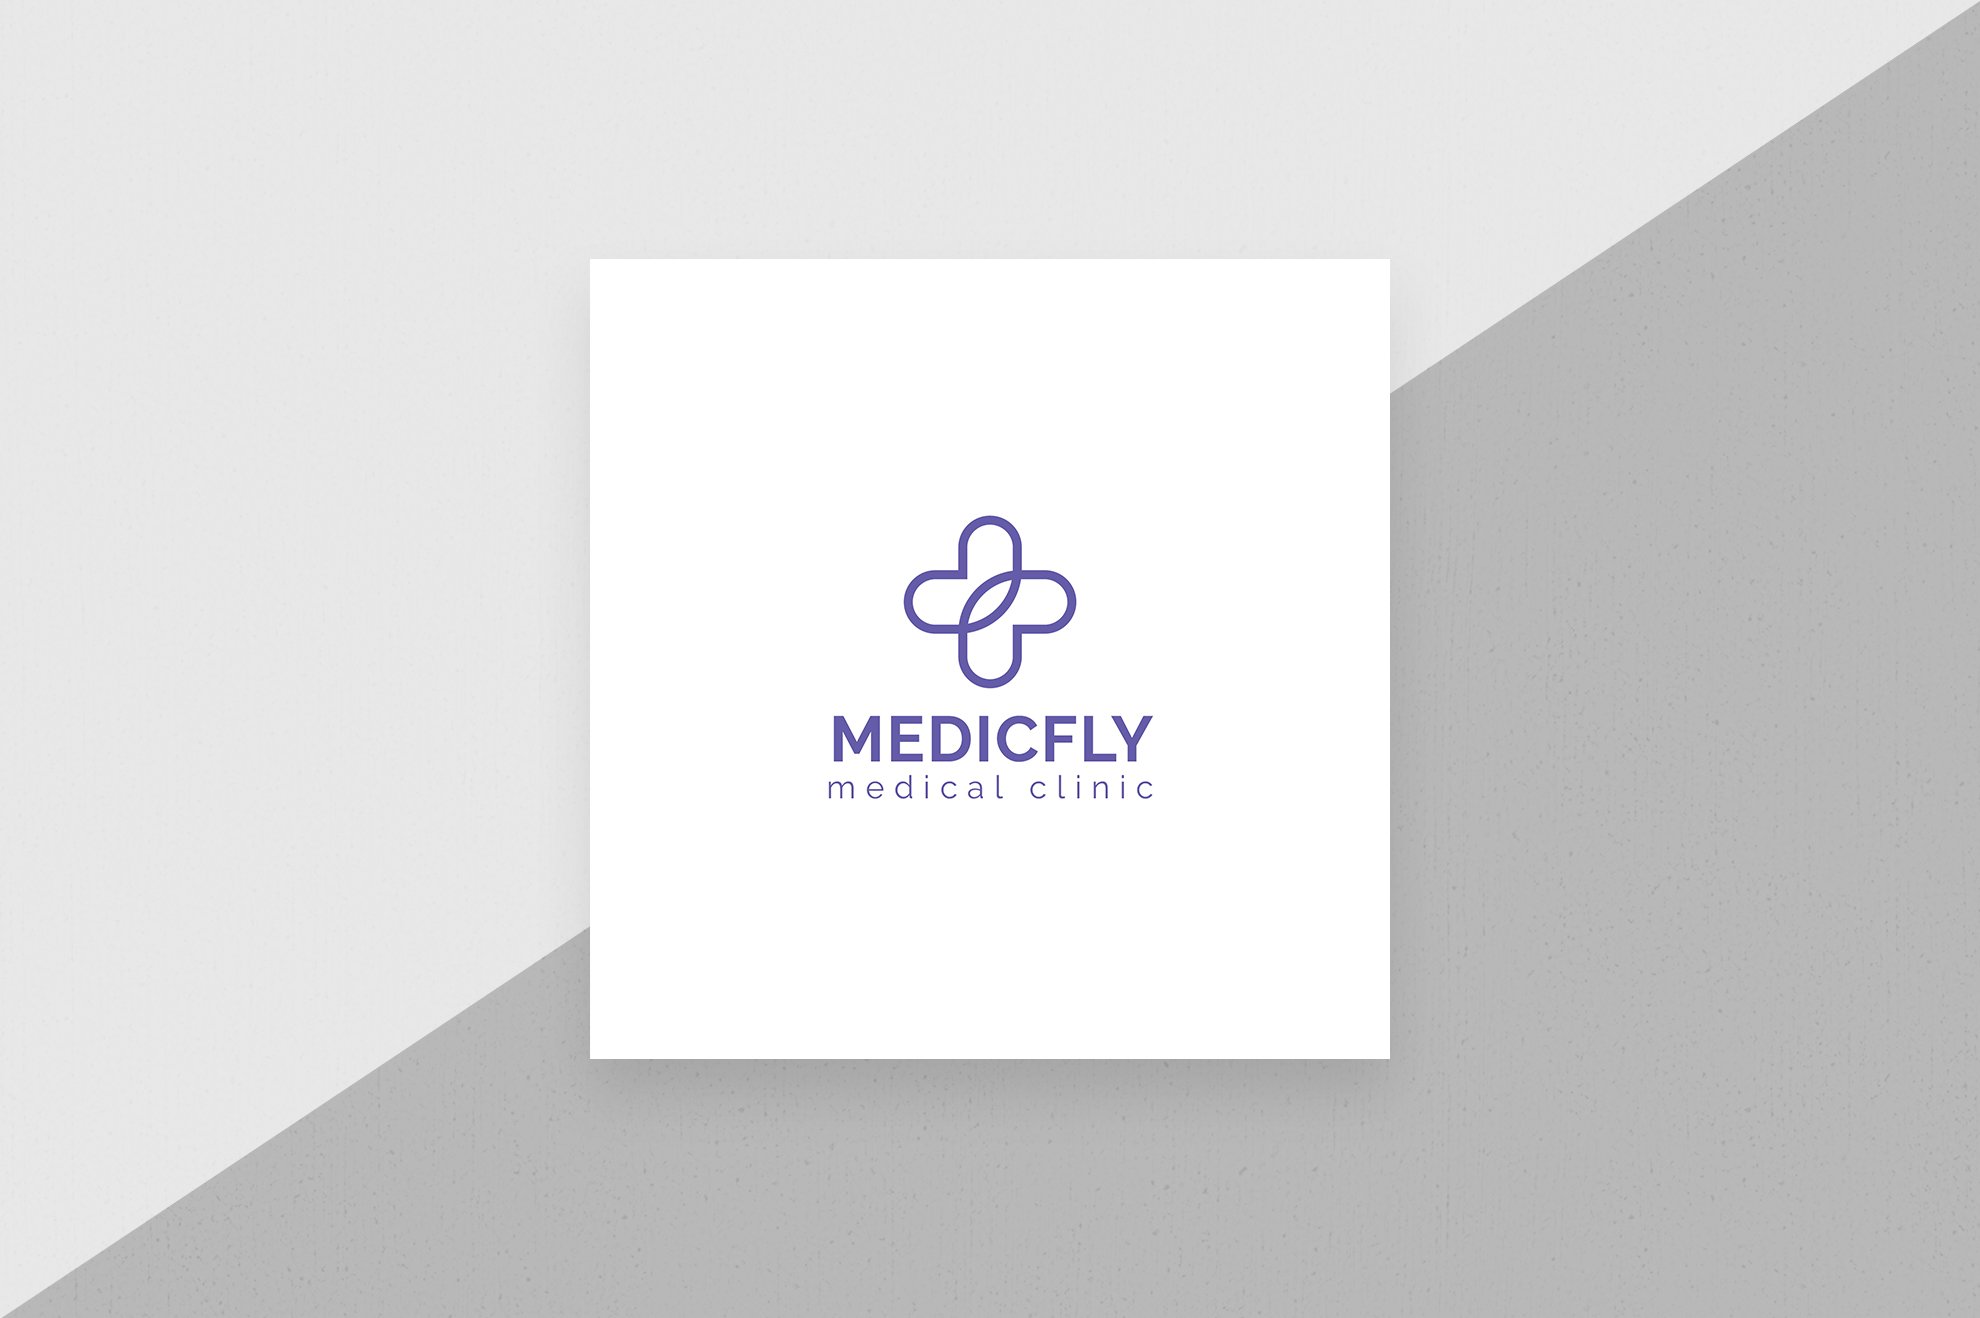 medical clinic logo 05 black and white inverted creativemarket 528